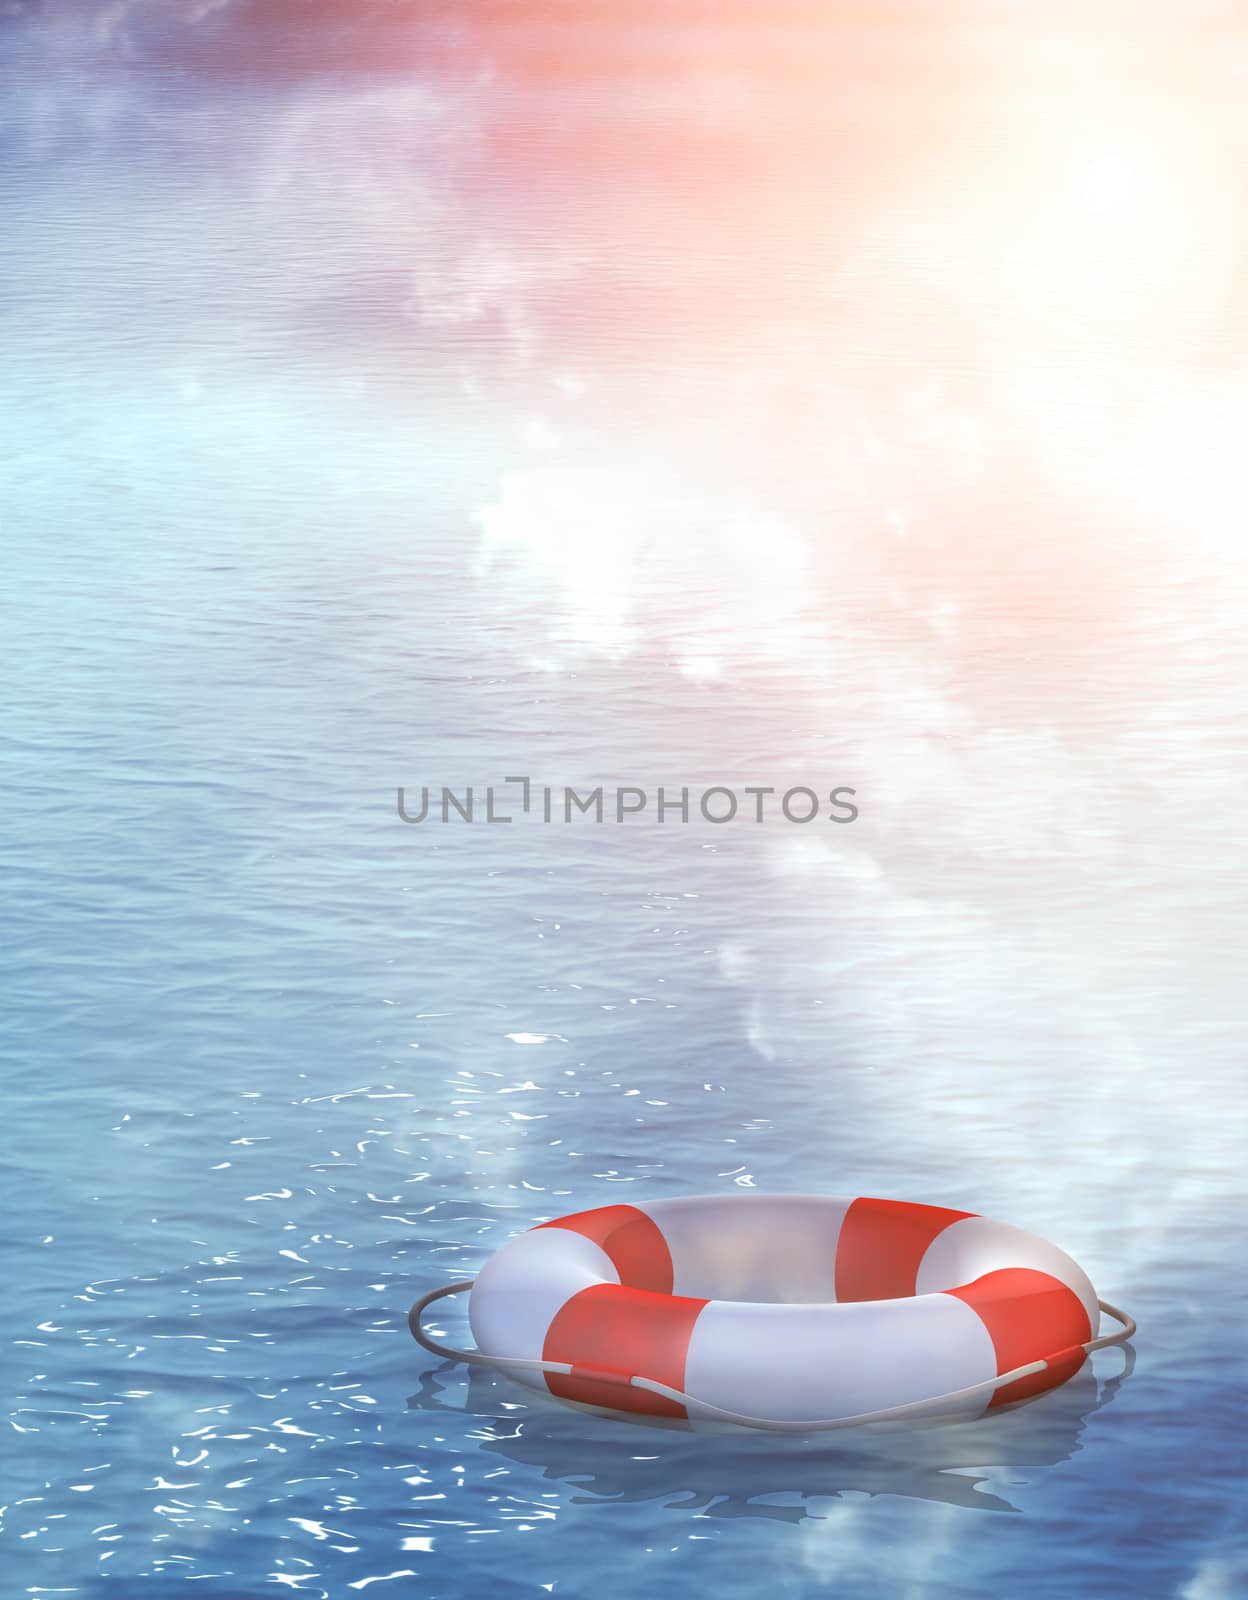 Lifebuoy, floating on waves by frenta